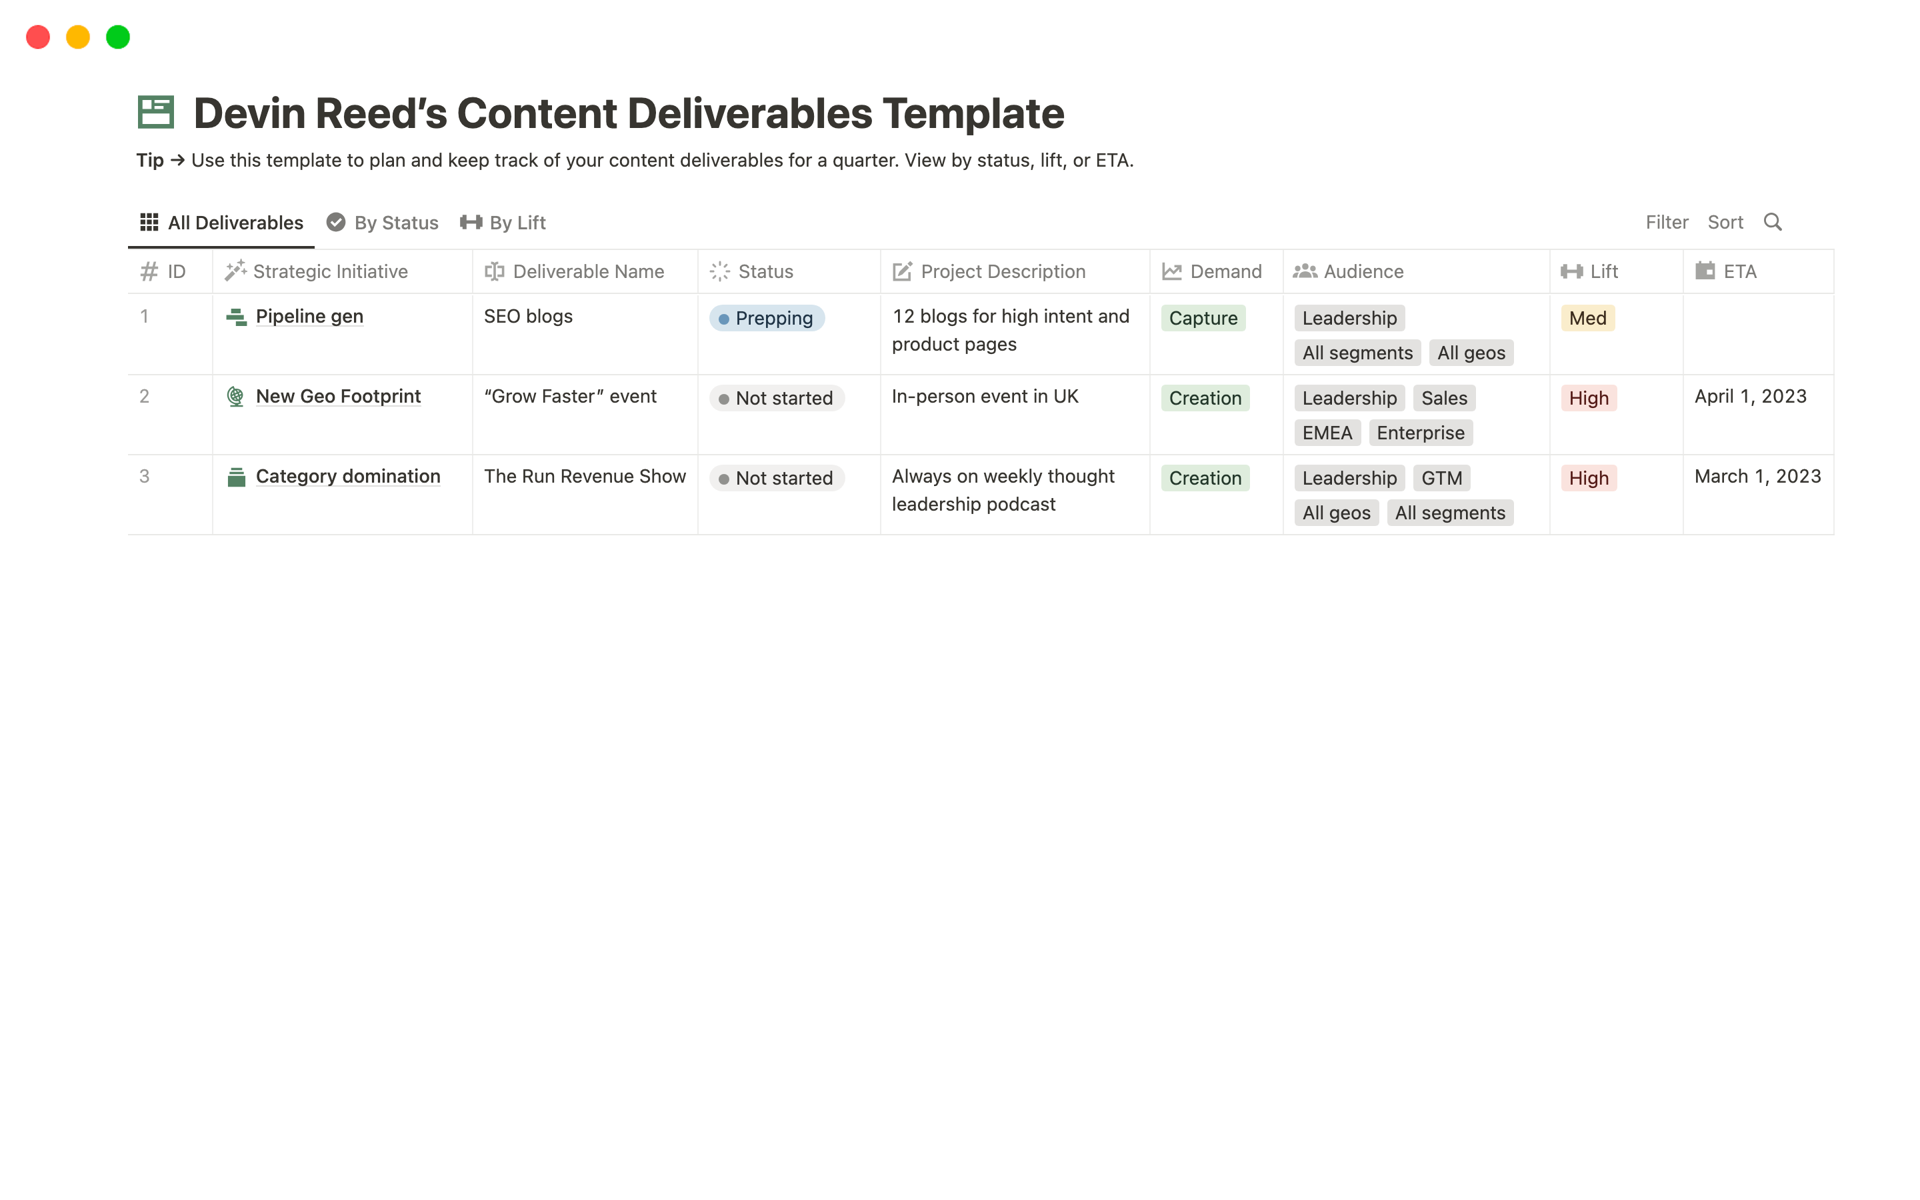 devin-reed-s-content-deliverables-template-devin-reed-desktop